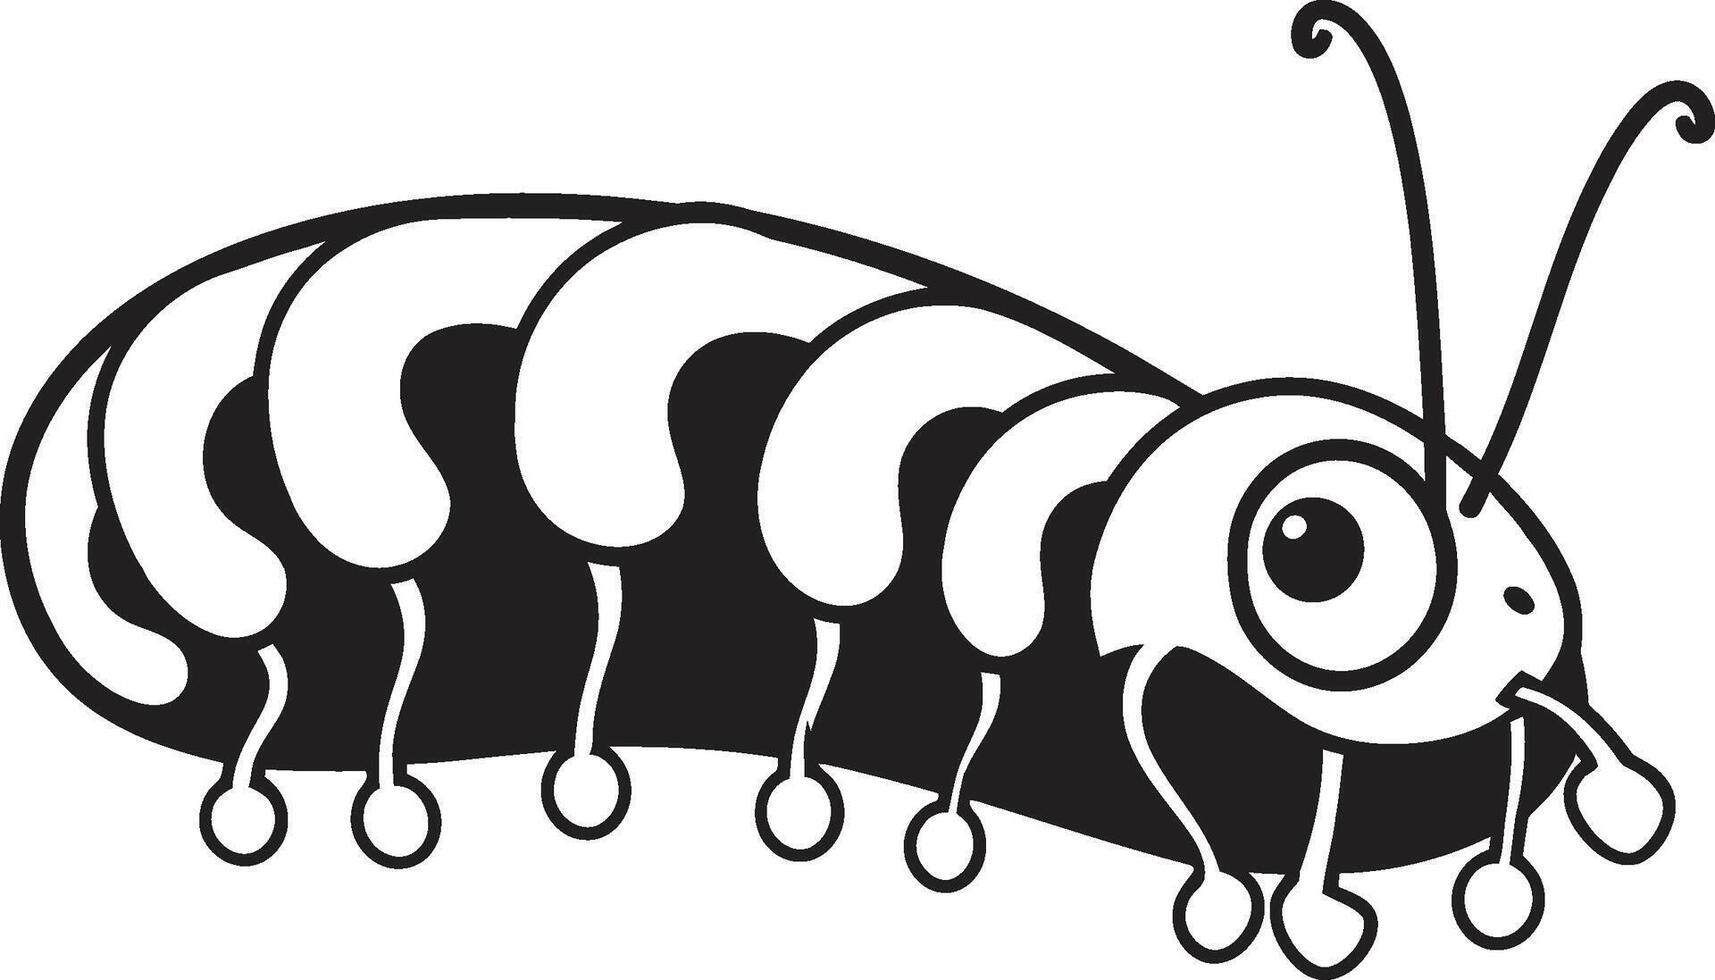 Creeping Chic Sleek Vector Logo Design for Stylish Caterpillar Caterpillar Couture Monochrome Icon in Natures Evolution